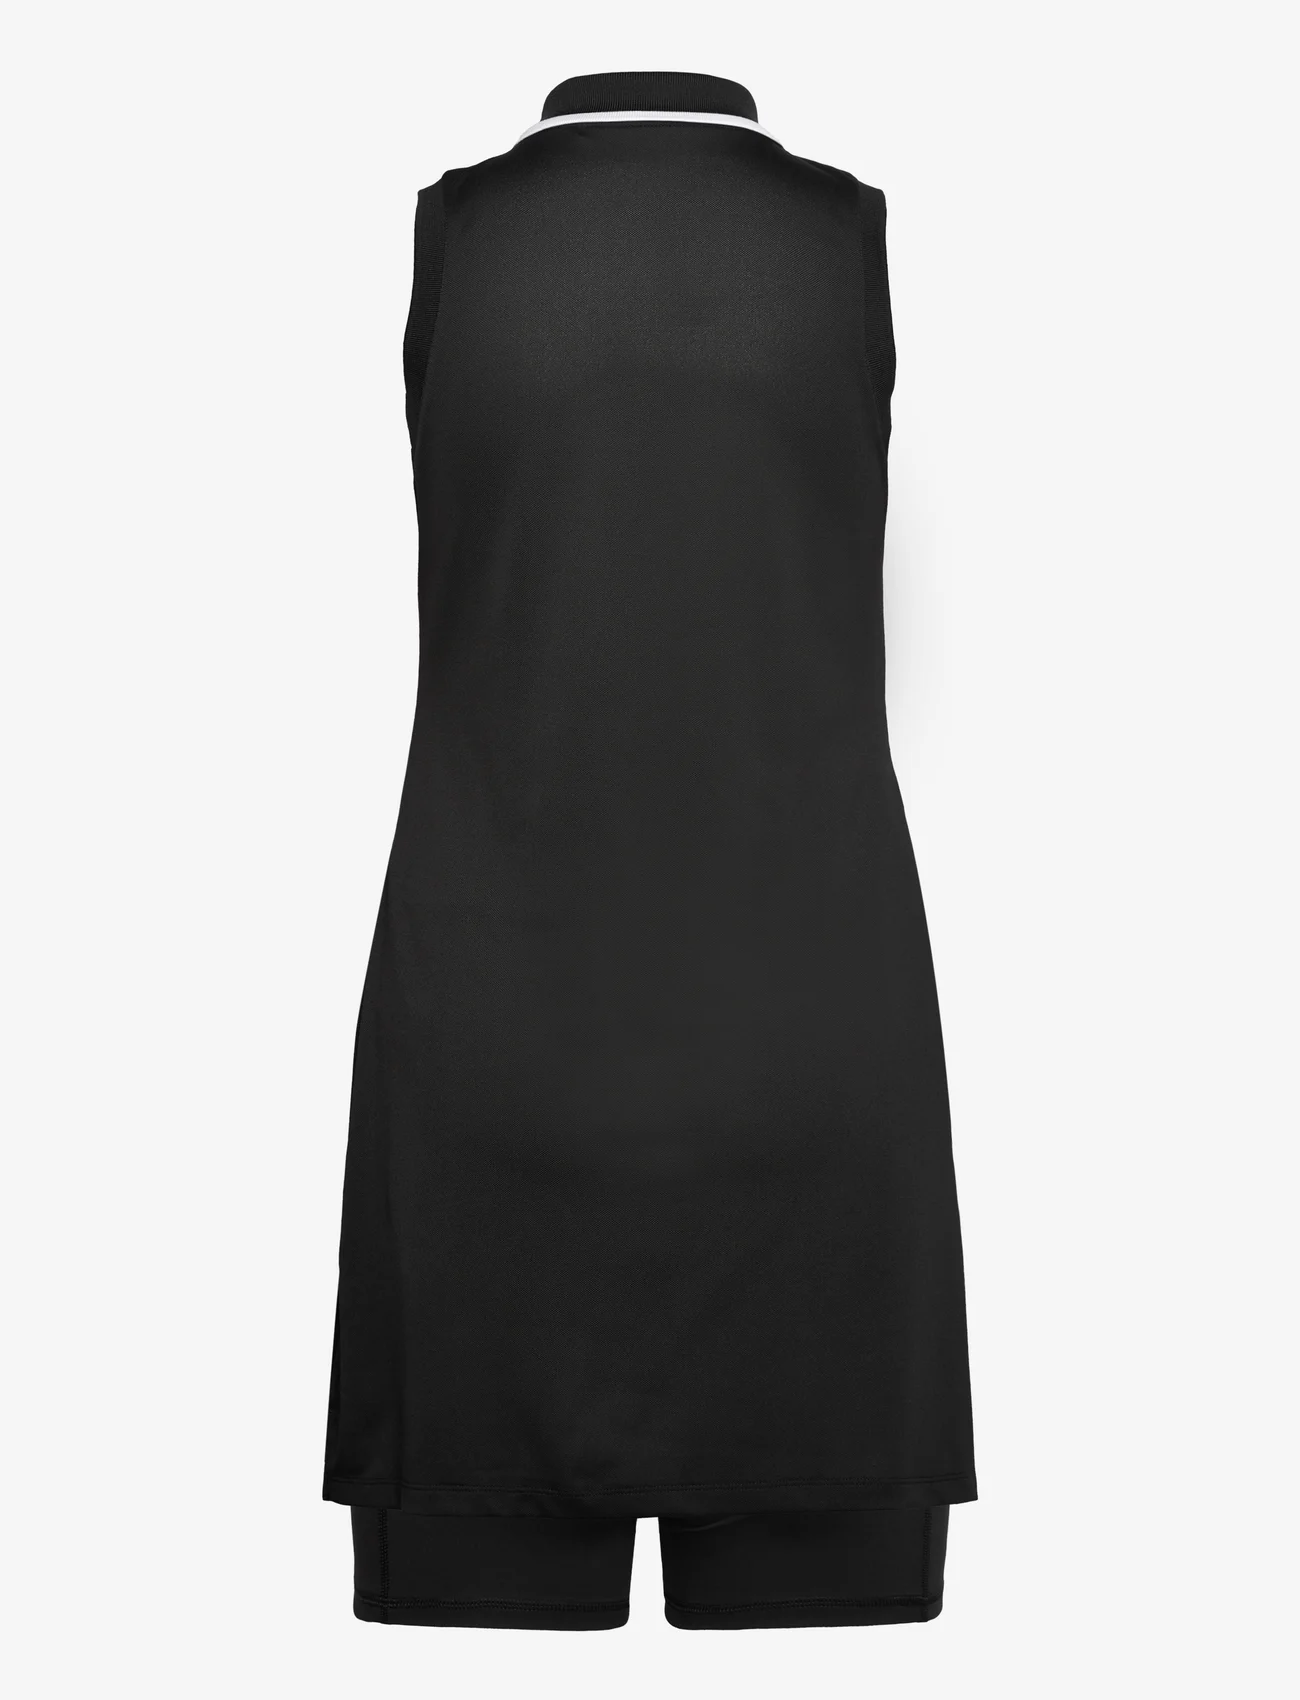 PUMA Golf - W Everyday Pique Dress - sportieve jurken - puma black - 1